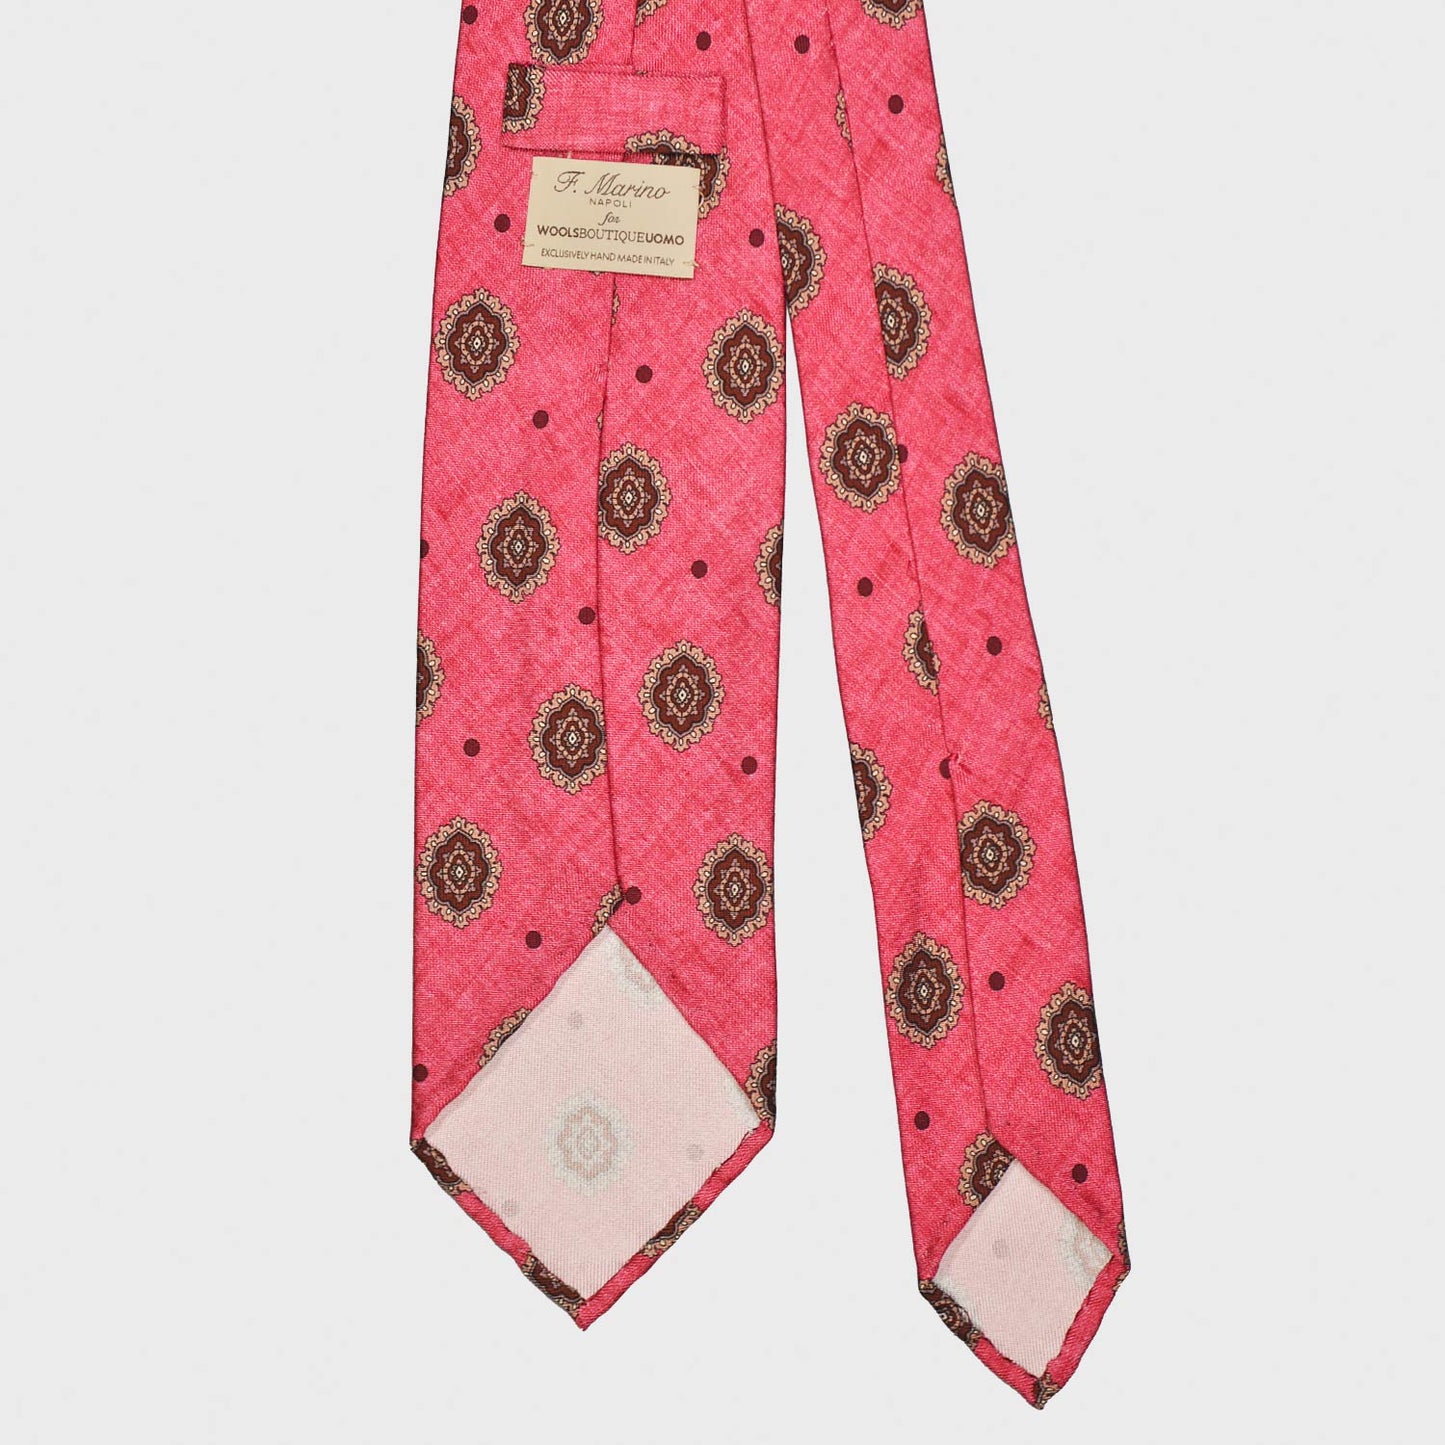 F.Marino Satin Silk Tie 3 Folds Medallions Strawberry Pink-Wools Boutique Uomo